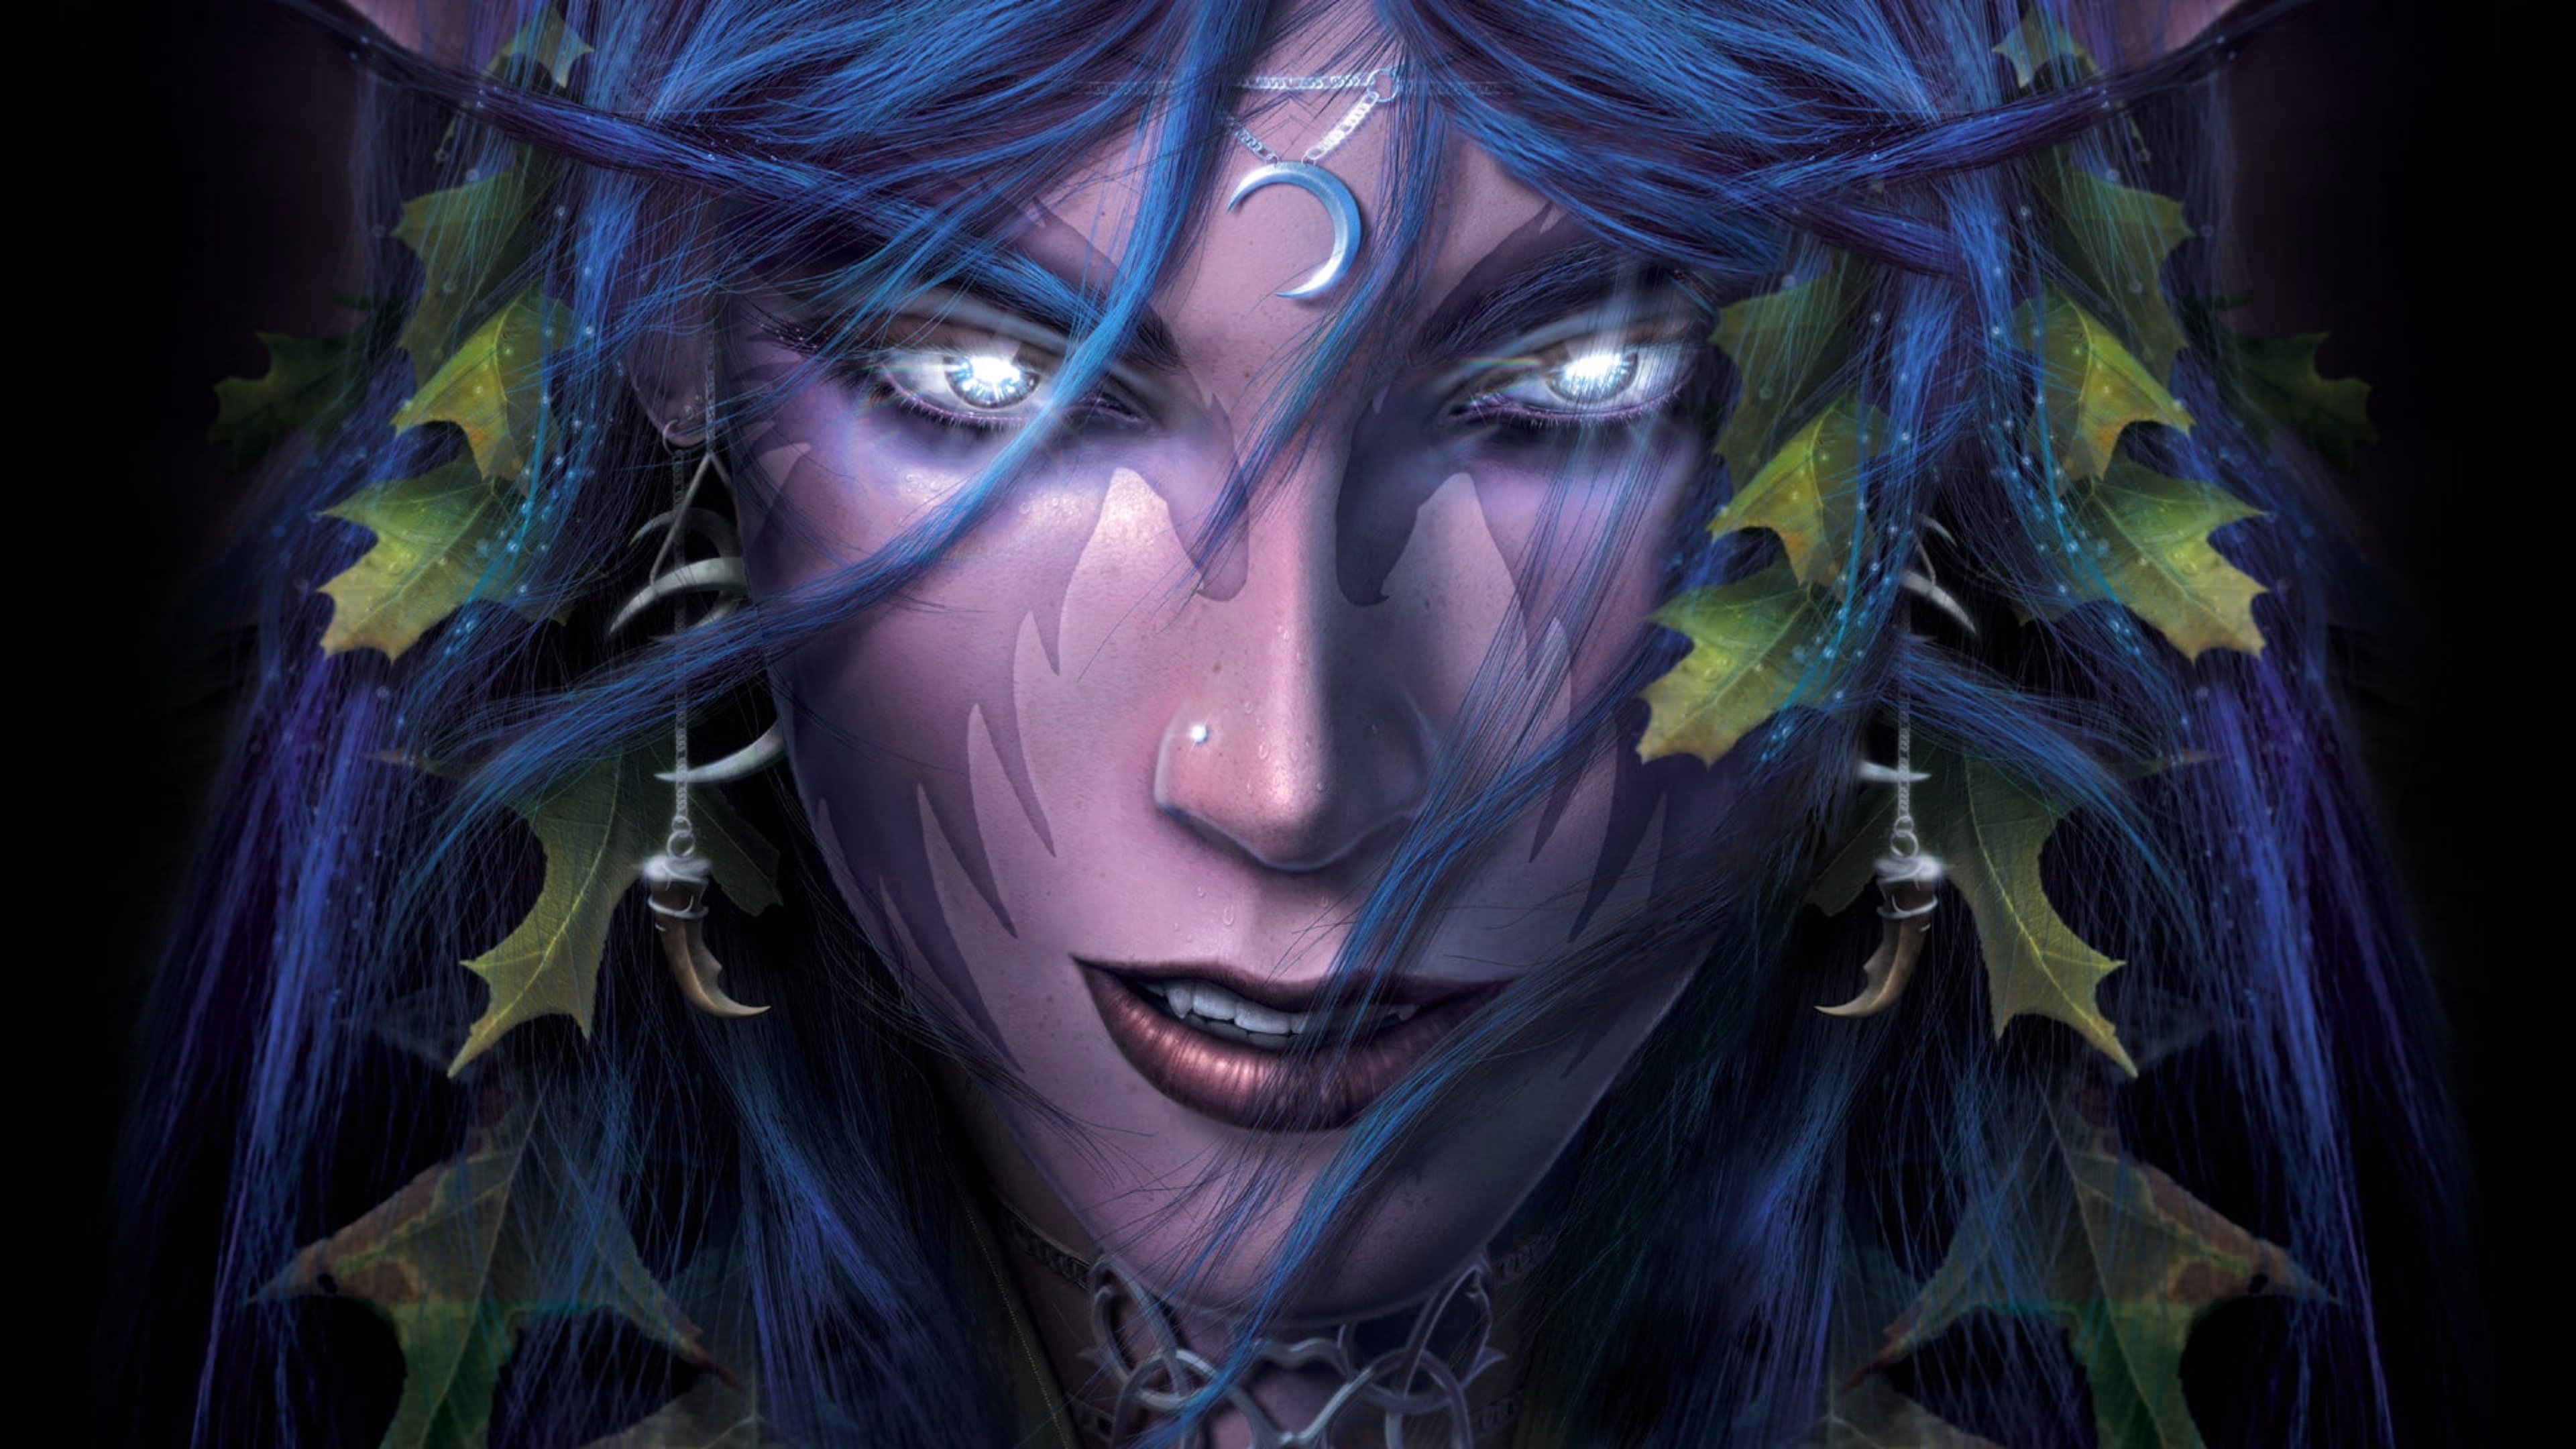 Digital art with Tyrande Whisperwind - Warcraft